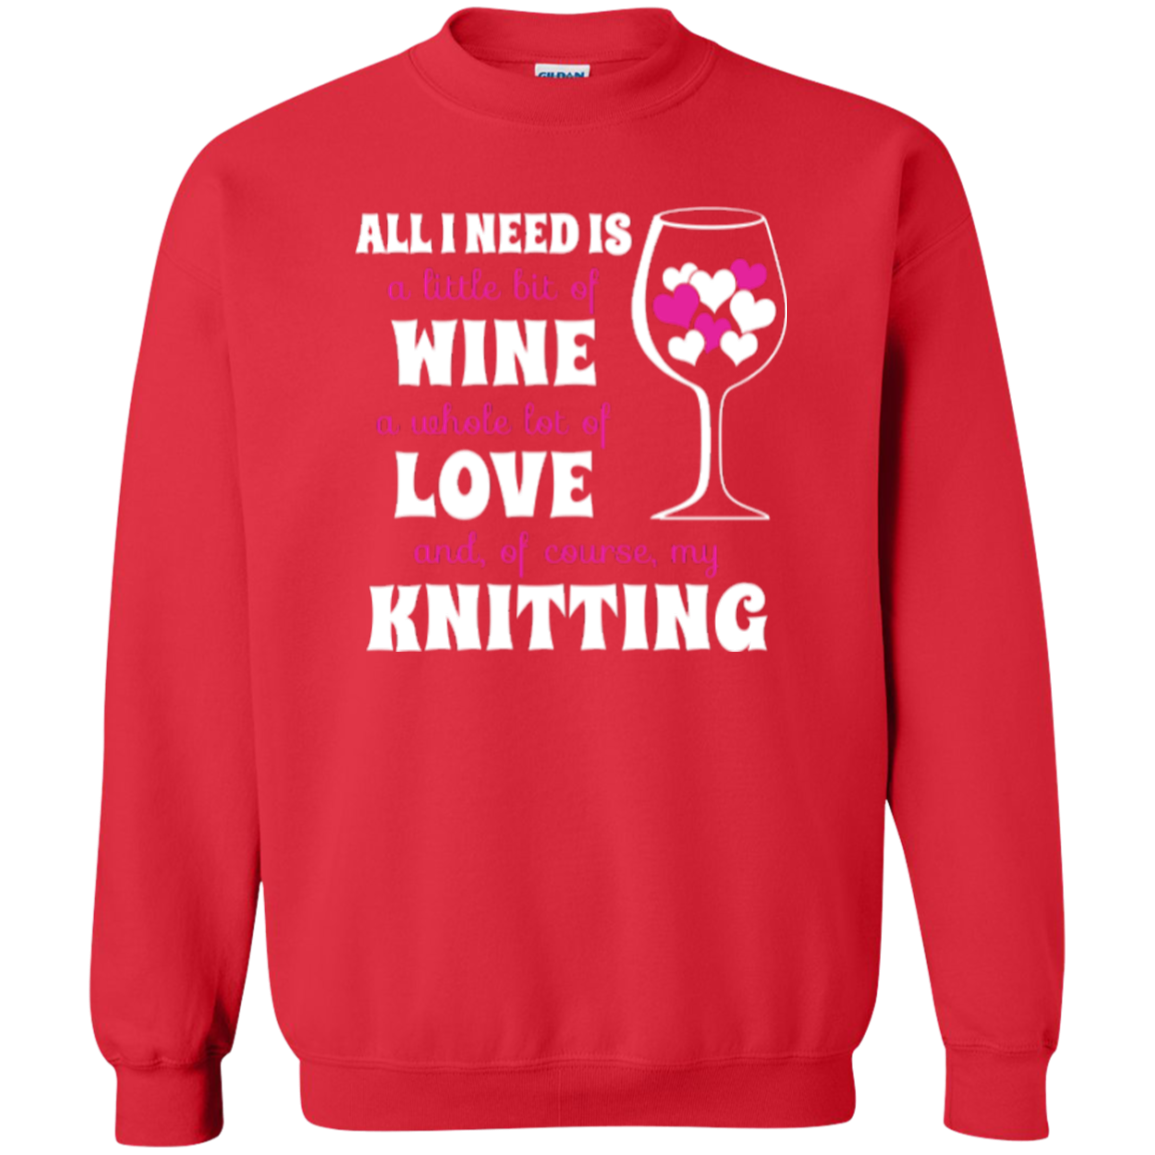 All I Need is Wine-Love-Knitting Crewneck Sweatshirt - Crafter4Life - 5